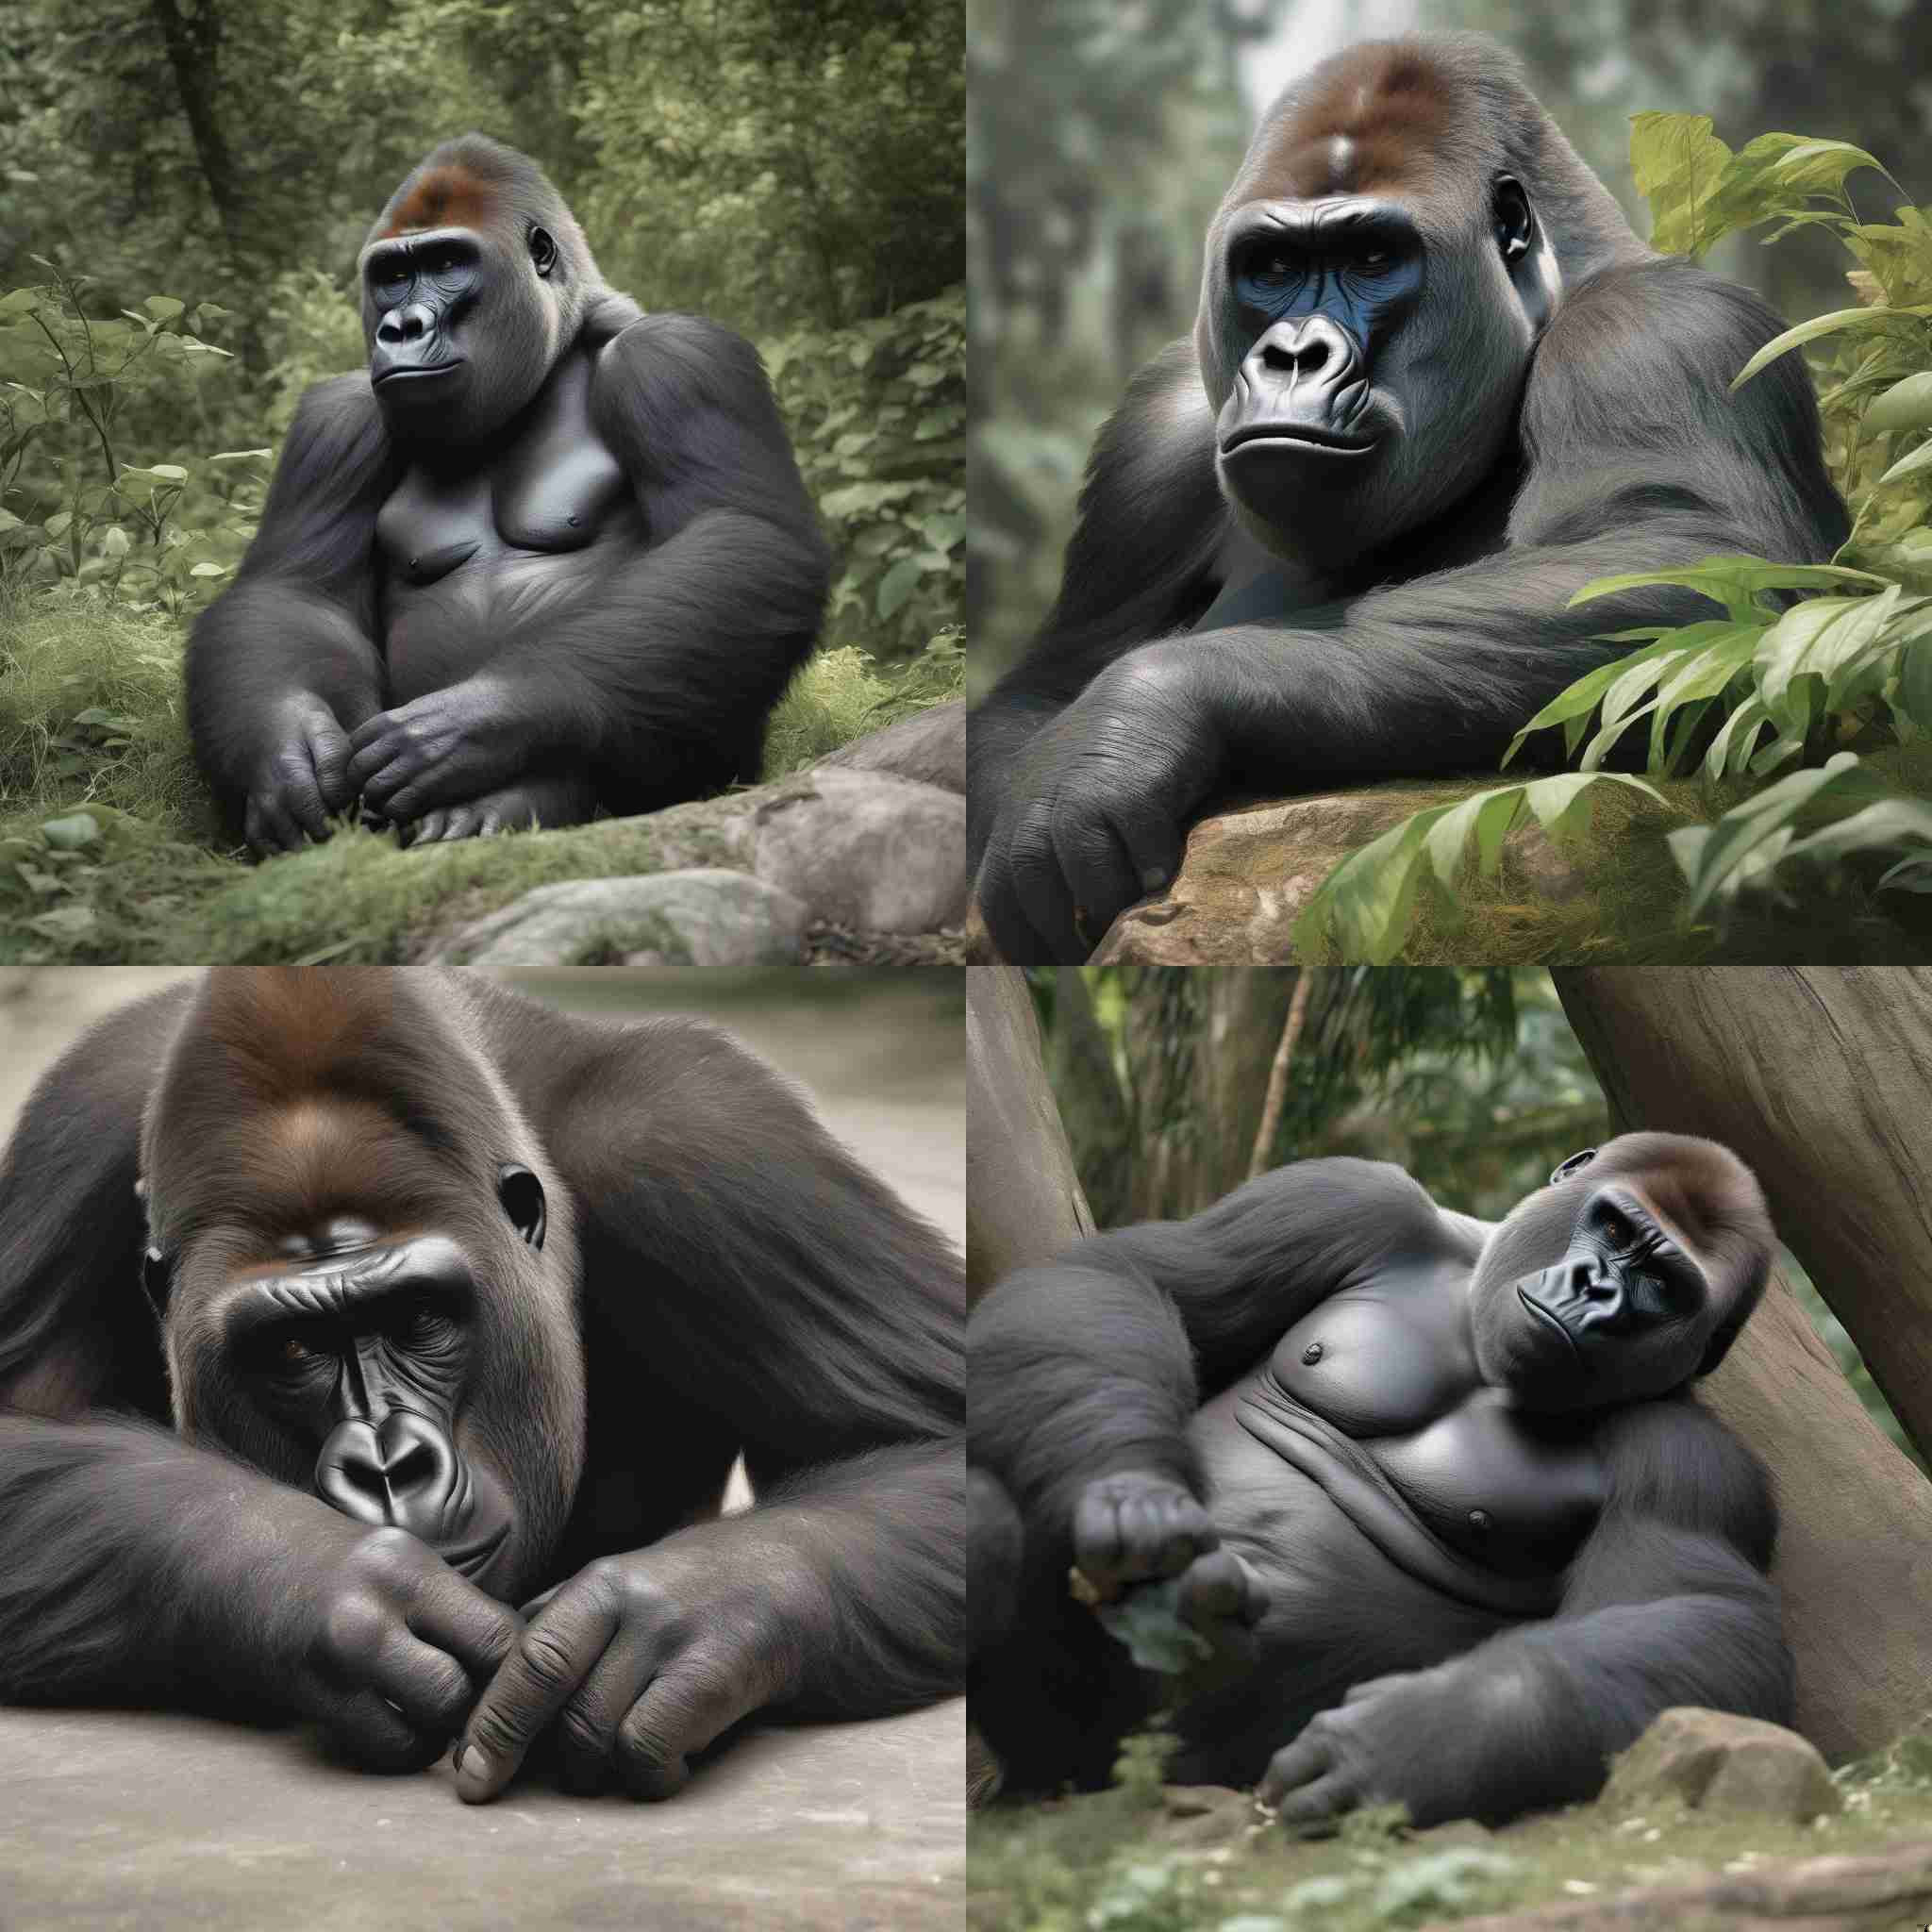 A resting gorilla